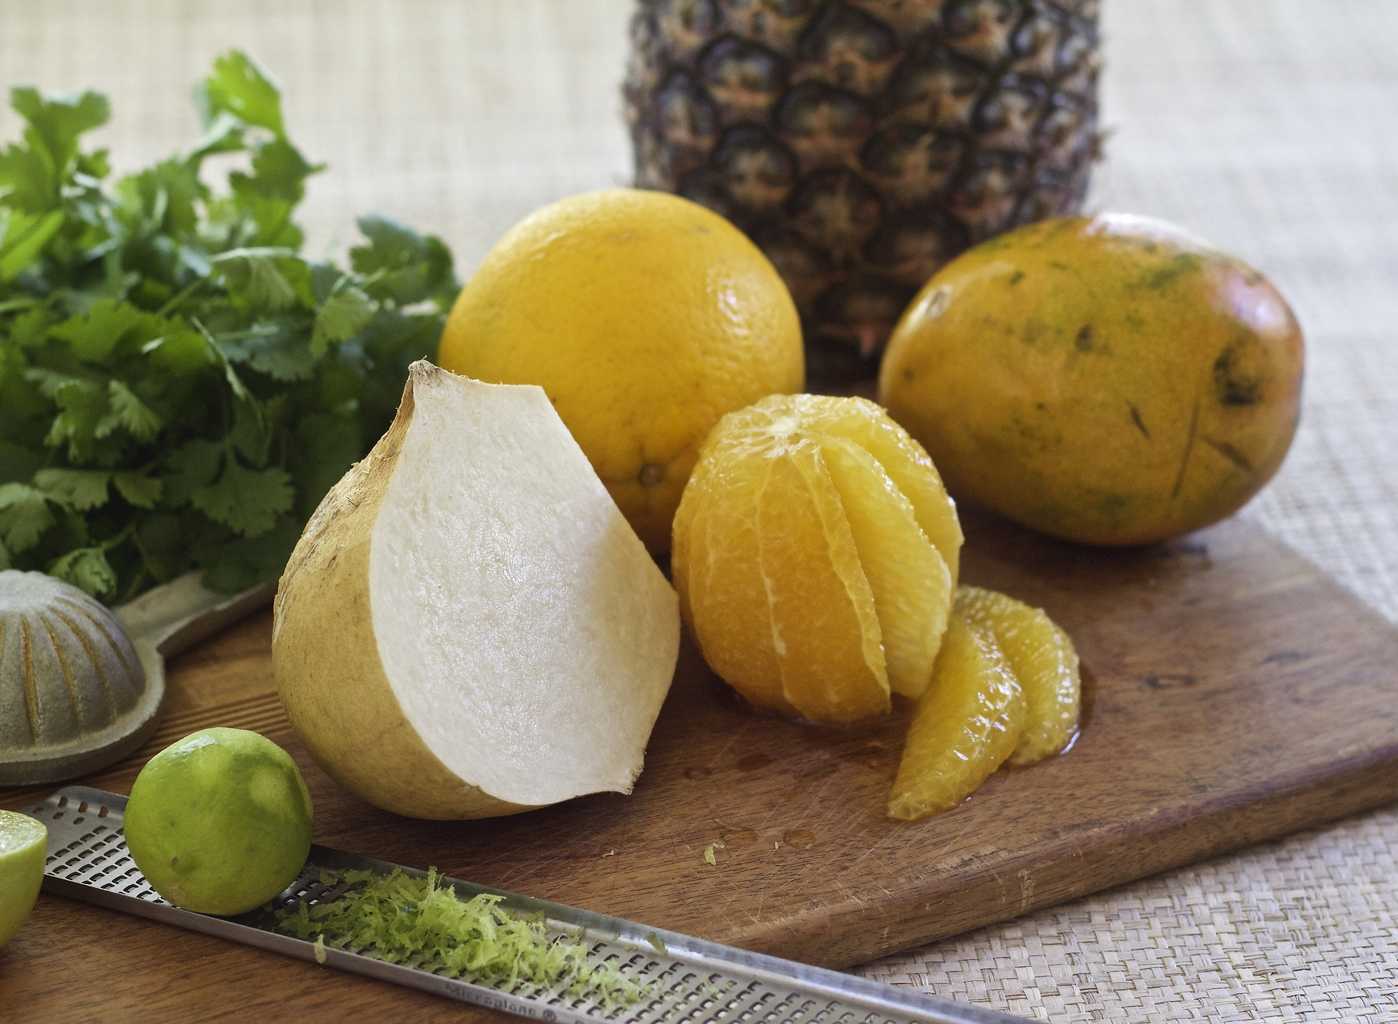 Jicama, Cilantro and Lime, mango orange and pineapple on wooden board